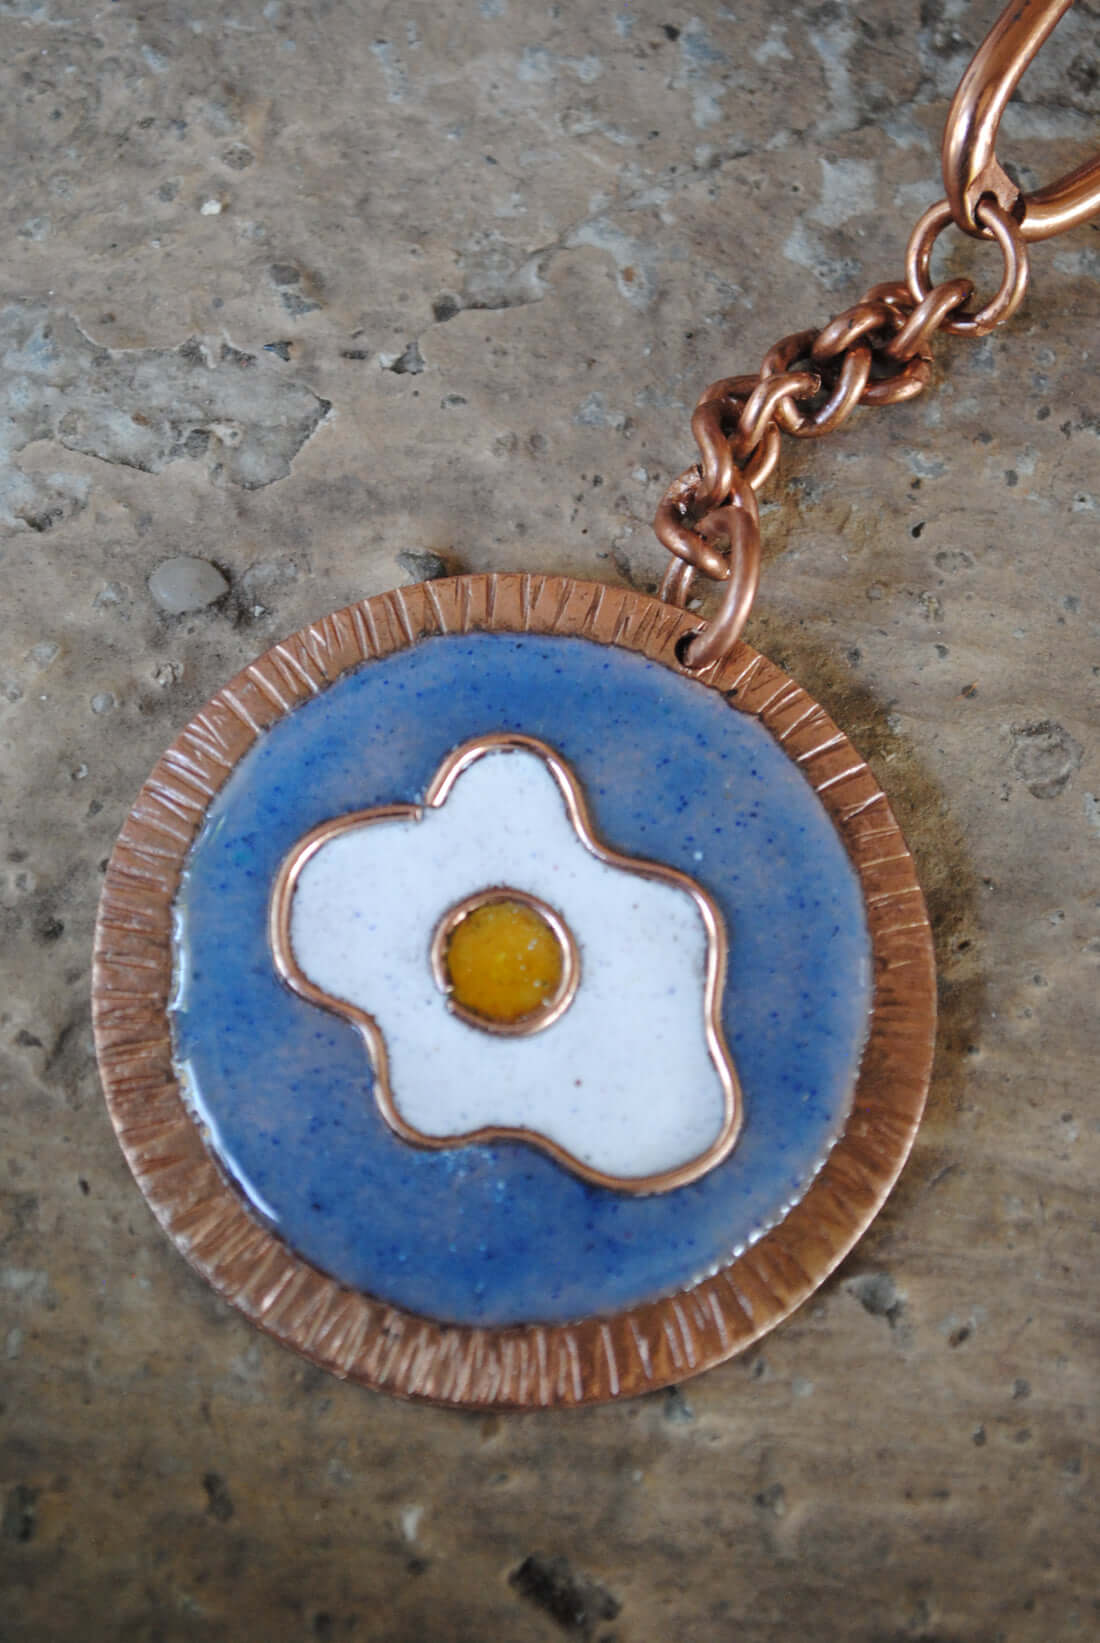 Copper enamel trinkets, keychain handcrafted in Maharashtra, India. Funky egg design